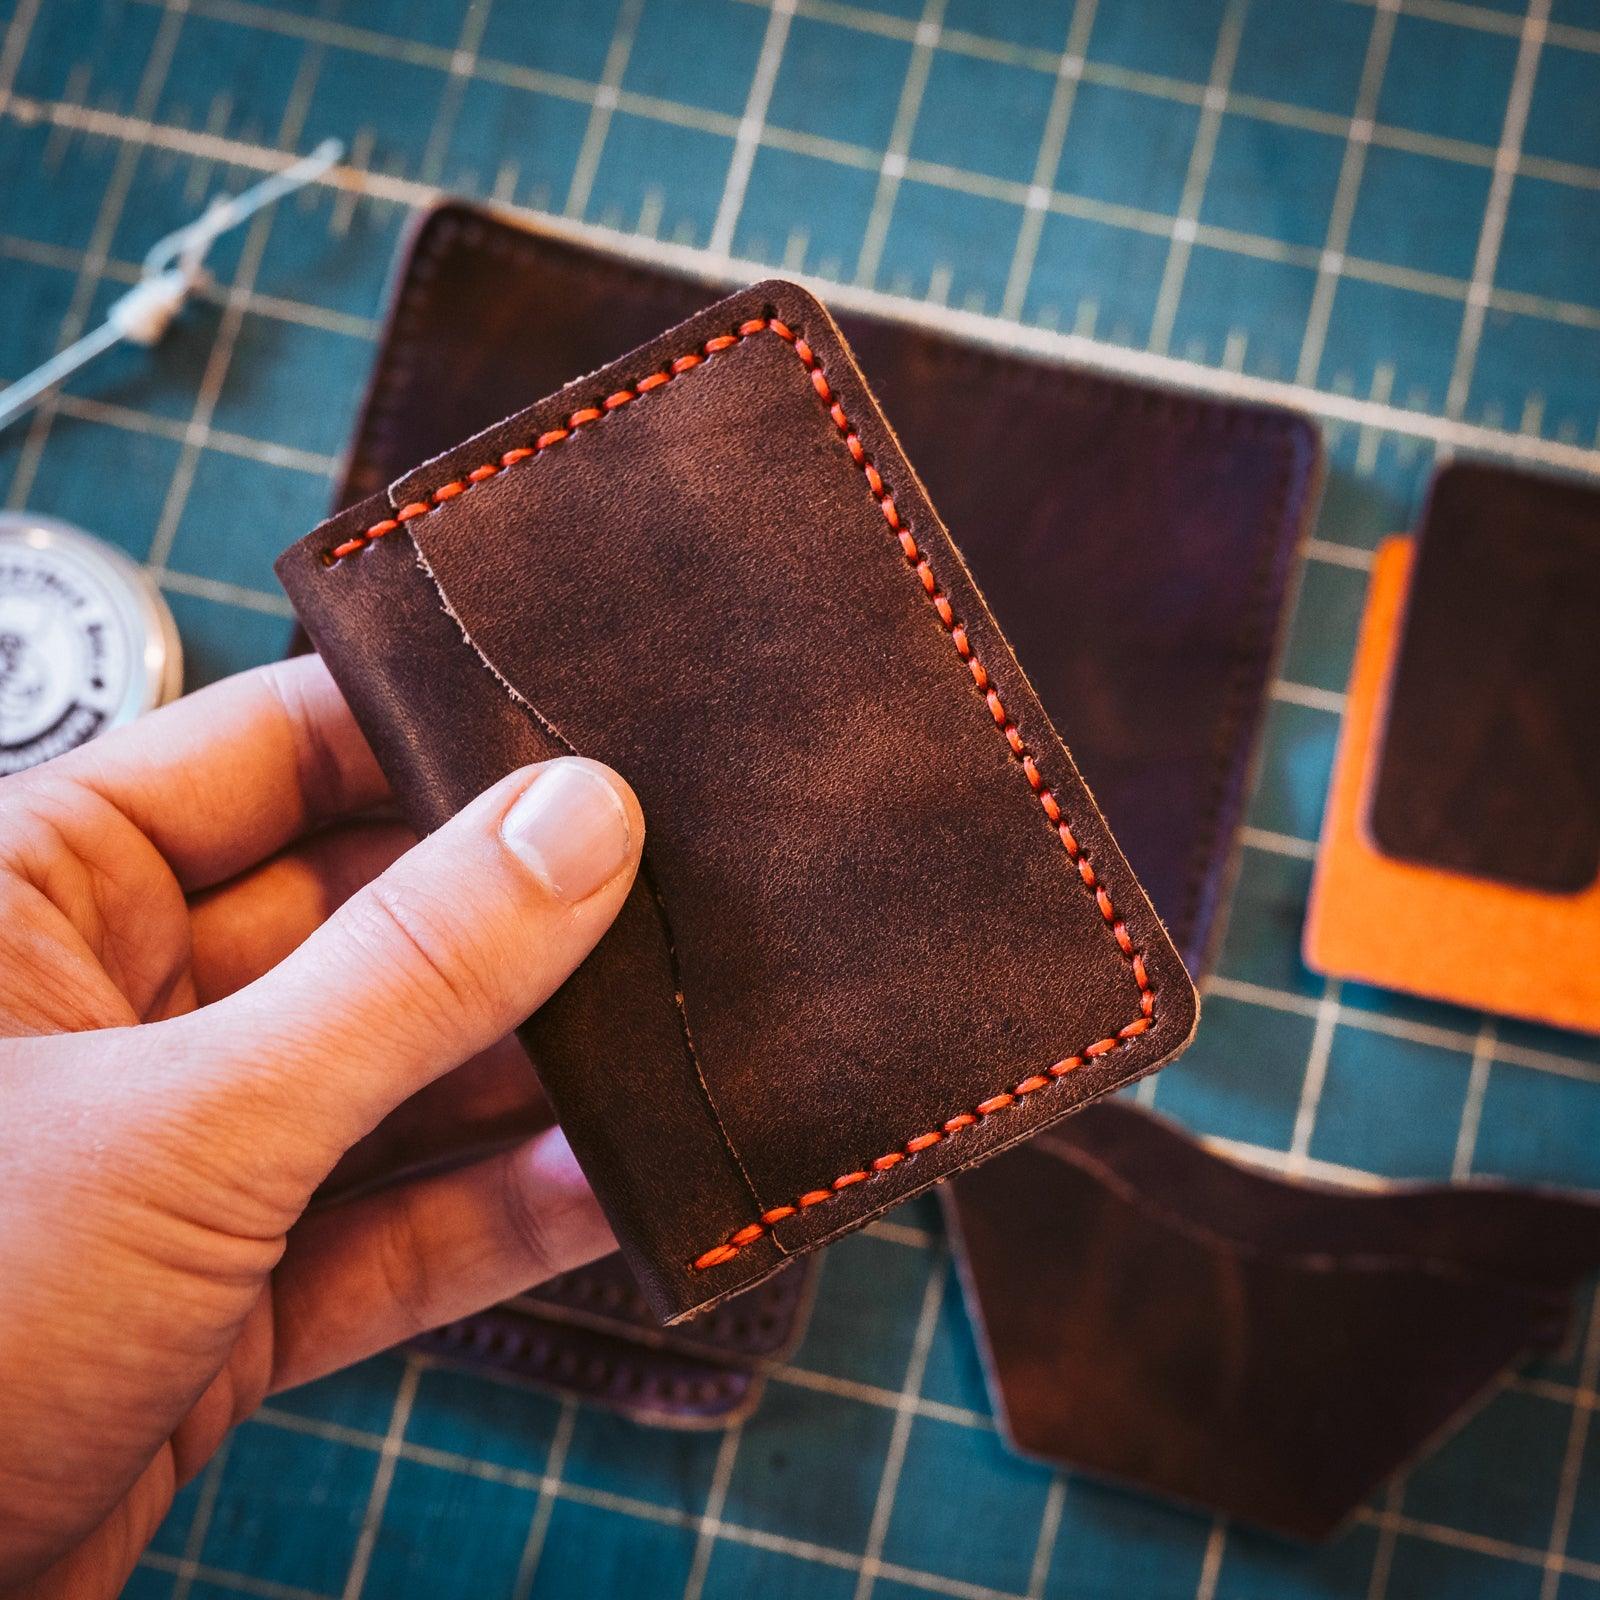 DIY Kit Leather / DIY Leather Set Box / Homemade Leather Gift